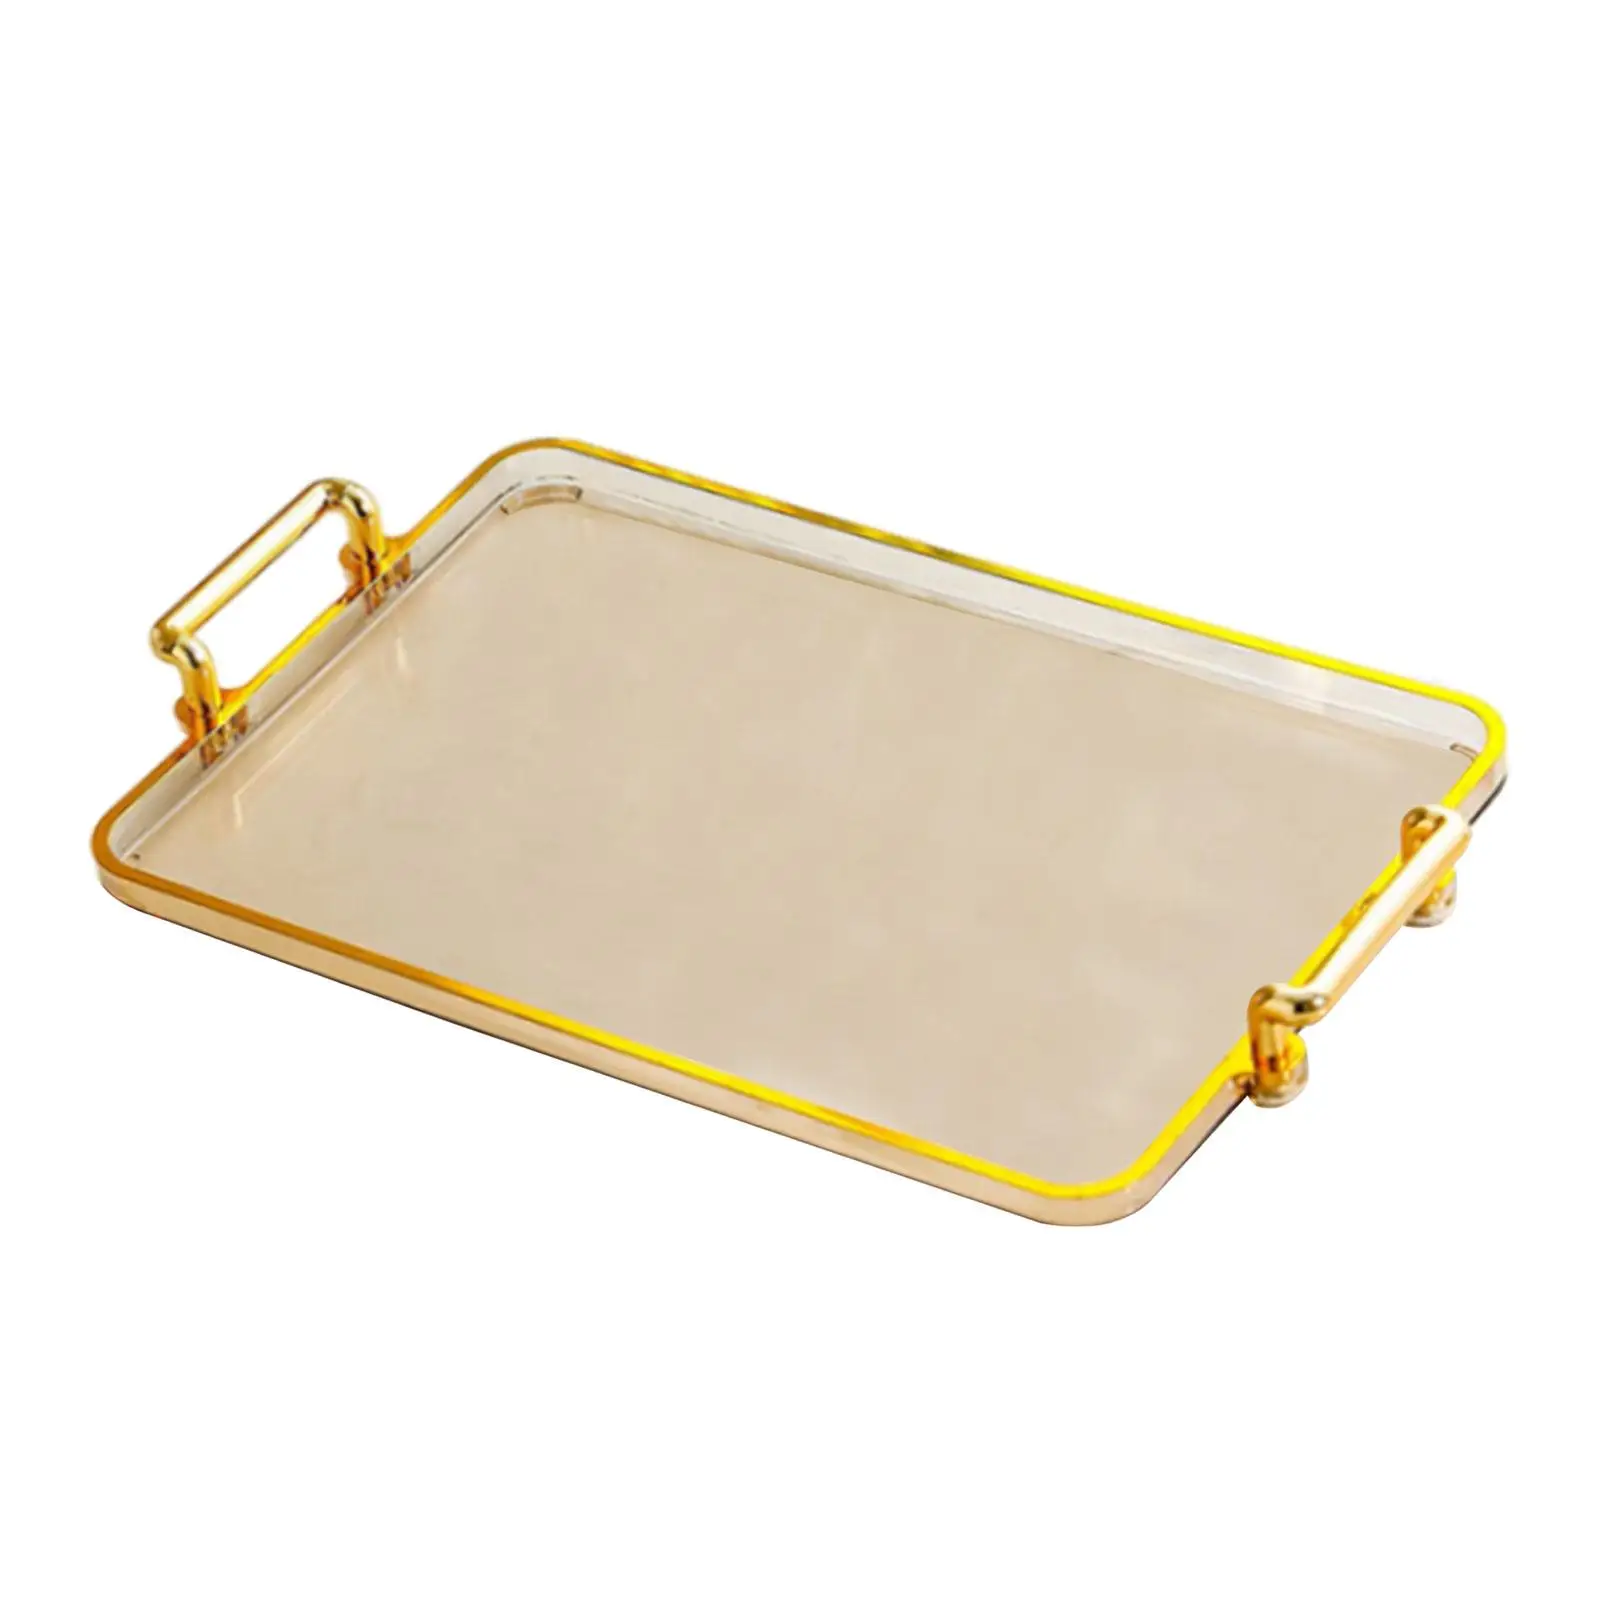 Serving Platter Eating Tray for Indoor Outdoor Parties Practical Multipurpose